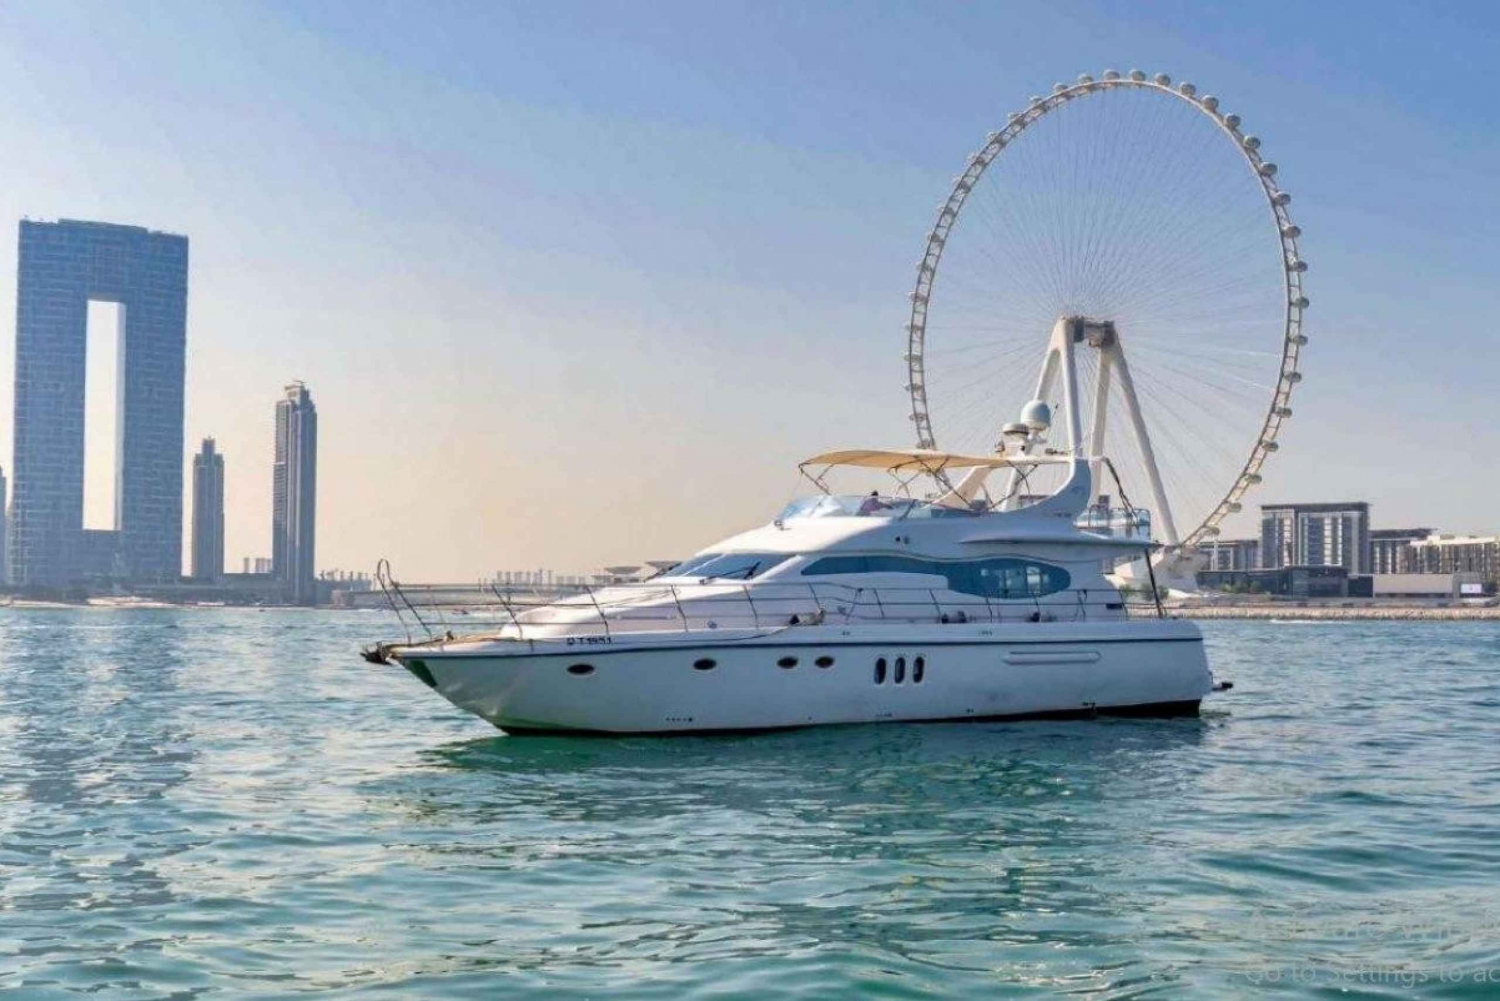 Dubai, privat yacht Privat yachttur i solnedgången, lyxig kryssning